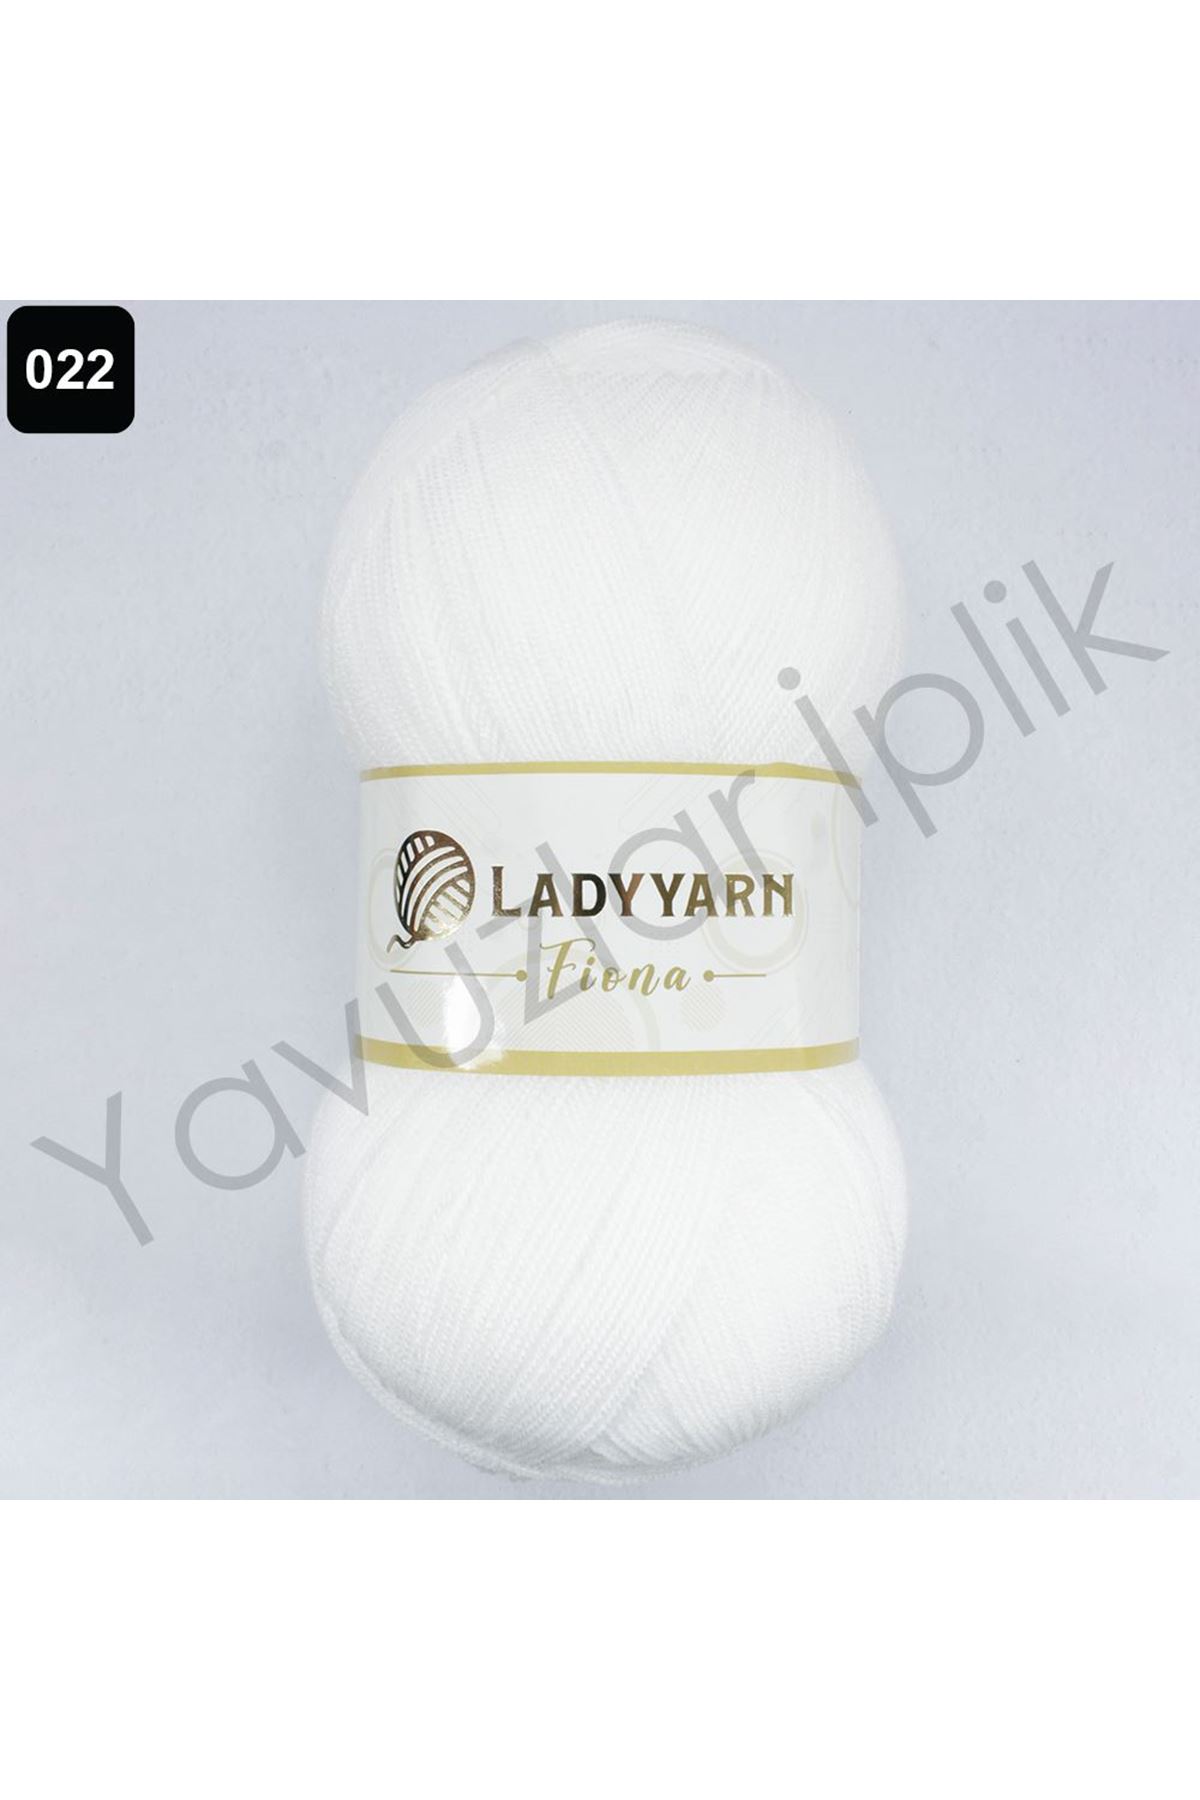 Lady Yarn Fiona Renk No: 022